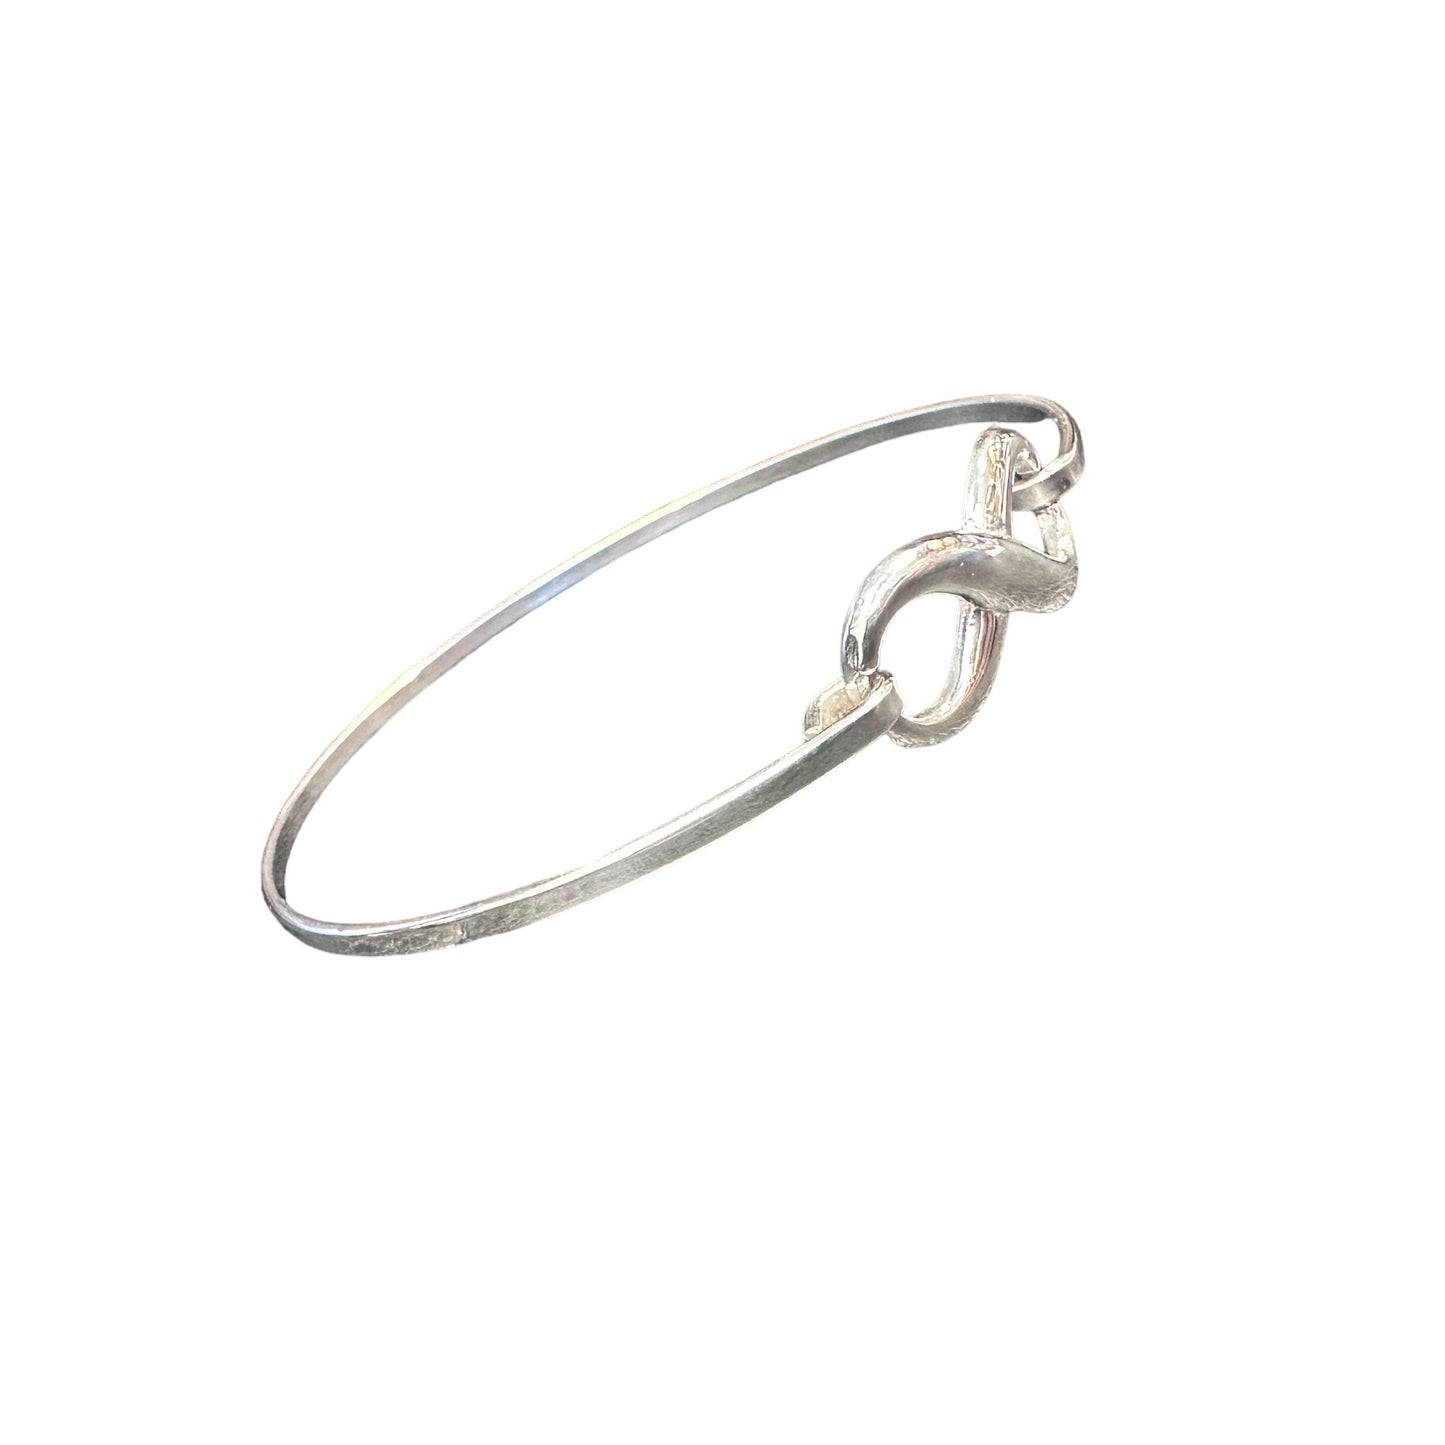 Infinity Latch Bangle Bracelet 7/16" Wide Sterling Silver